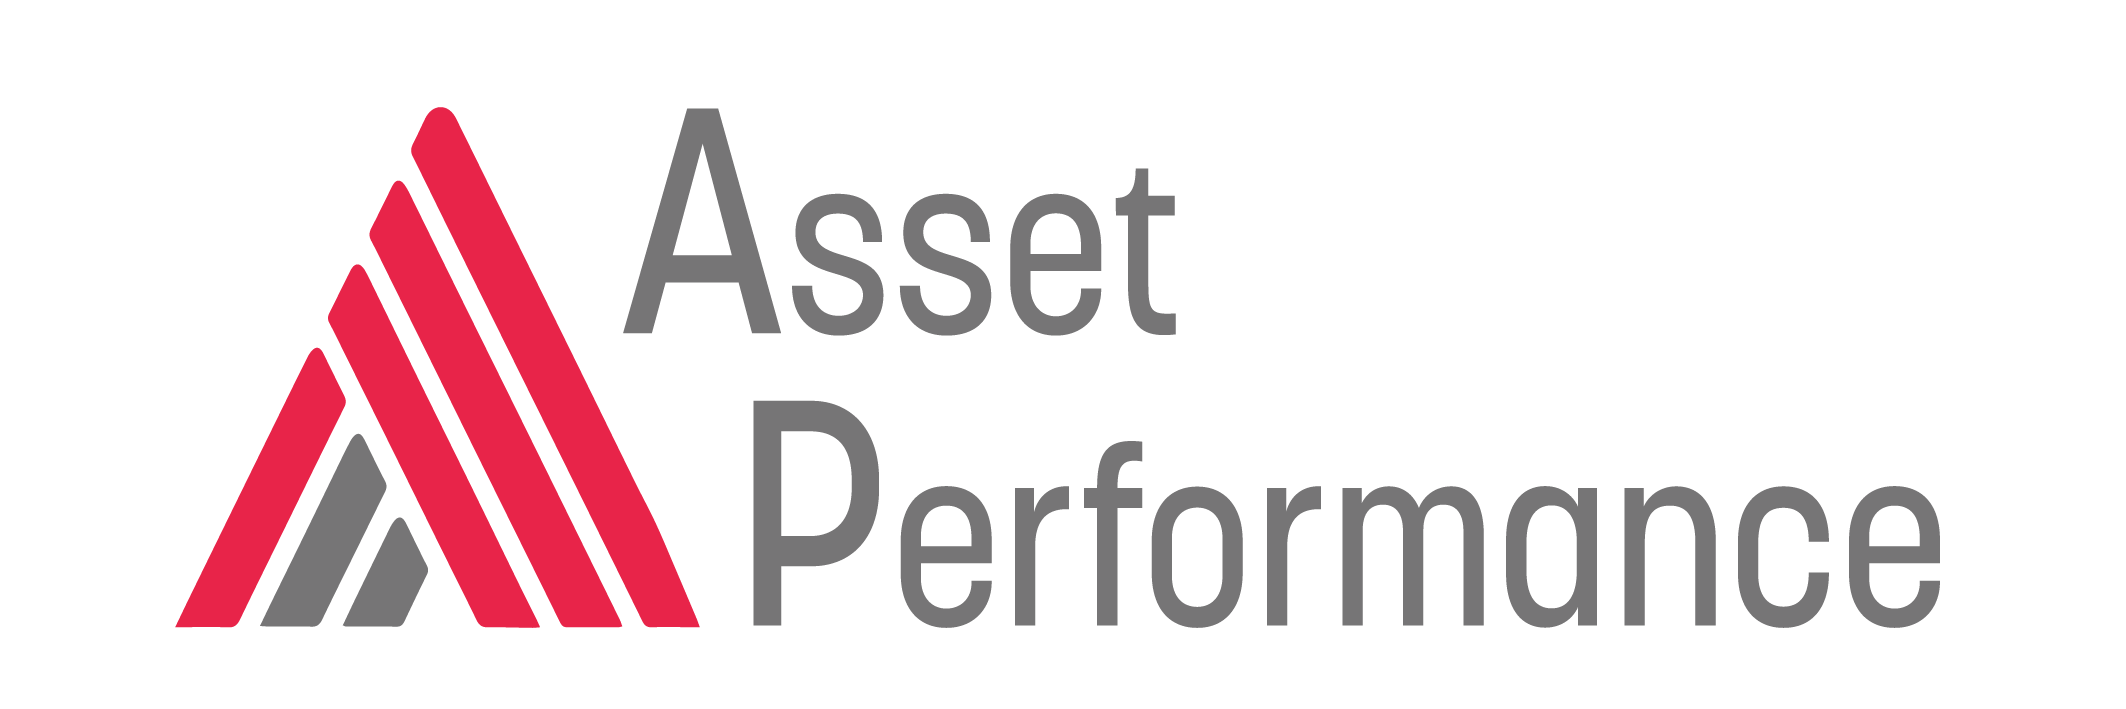 Asset Performance